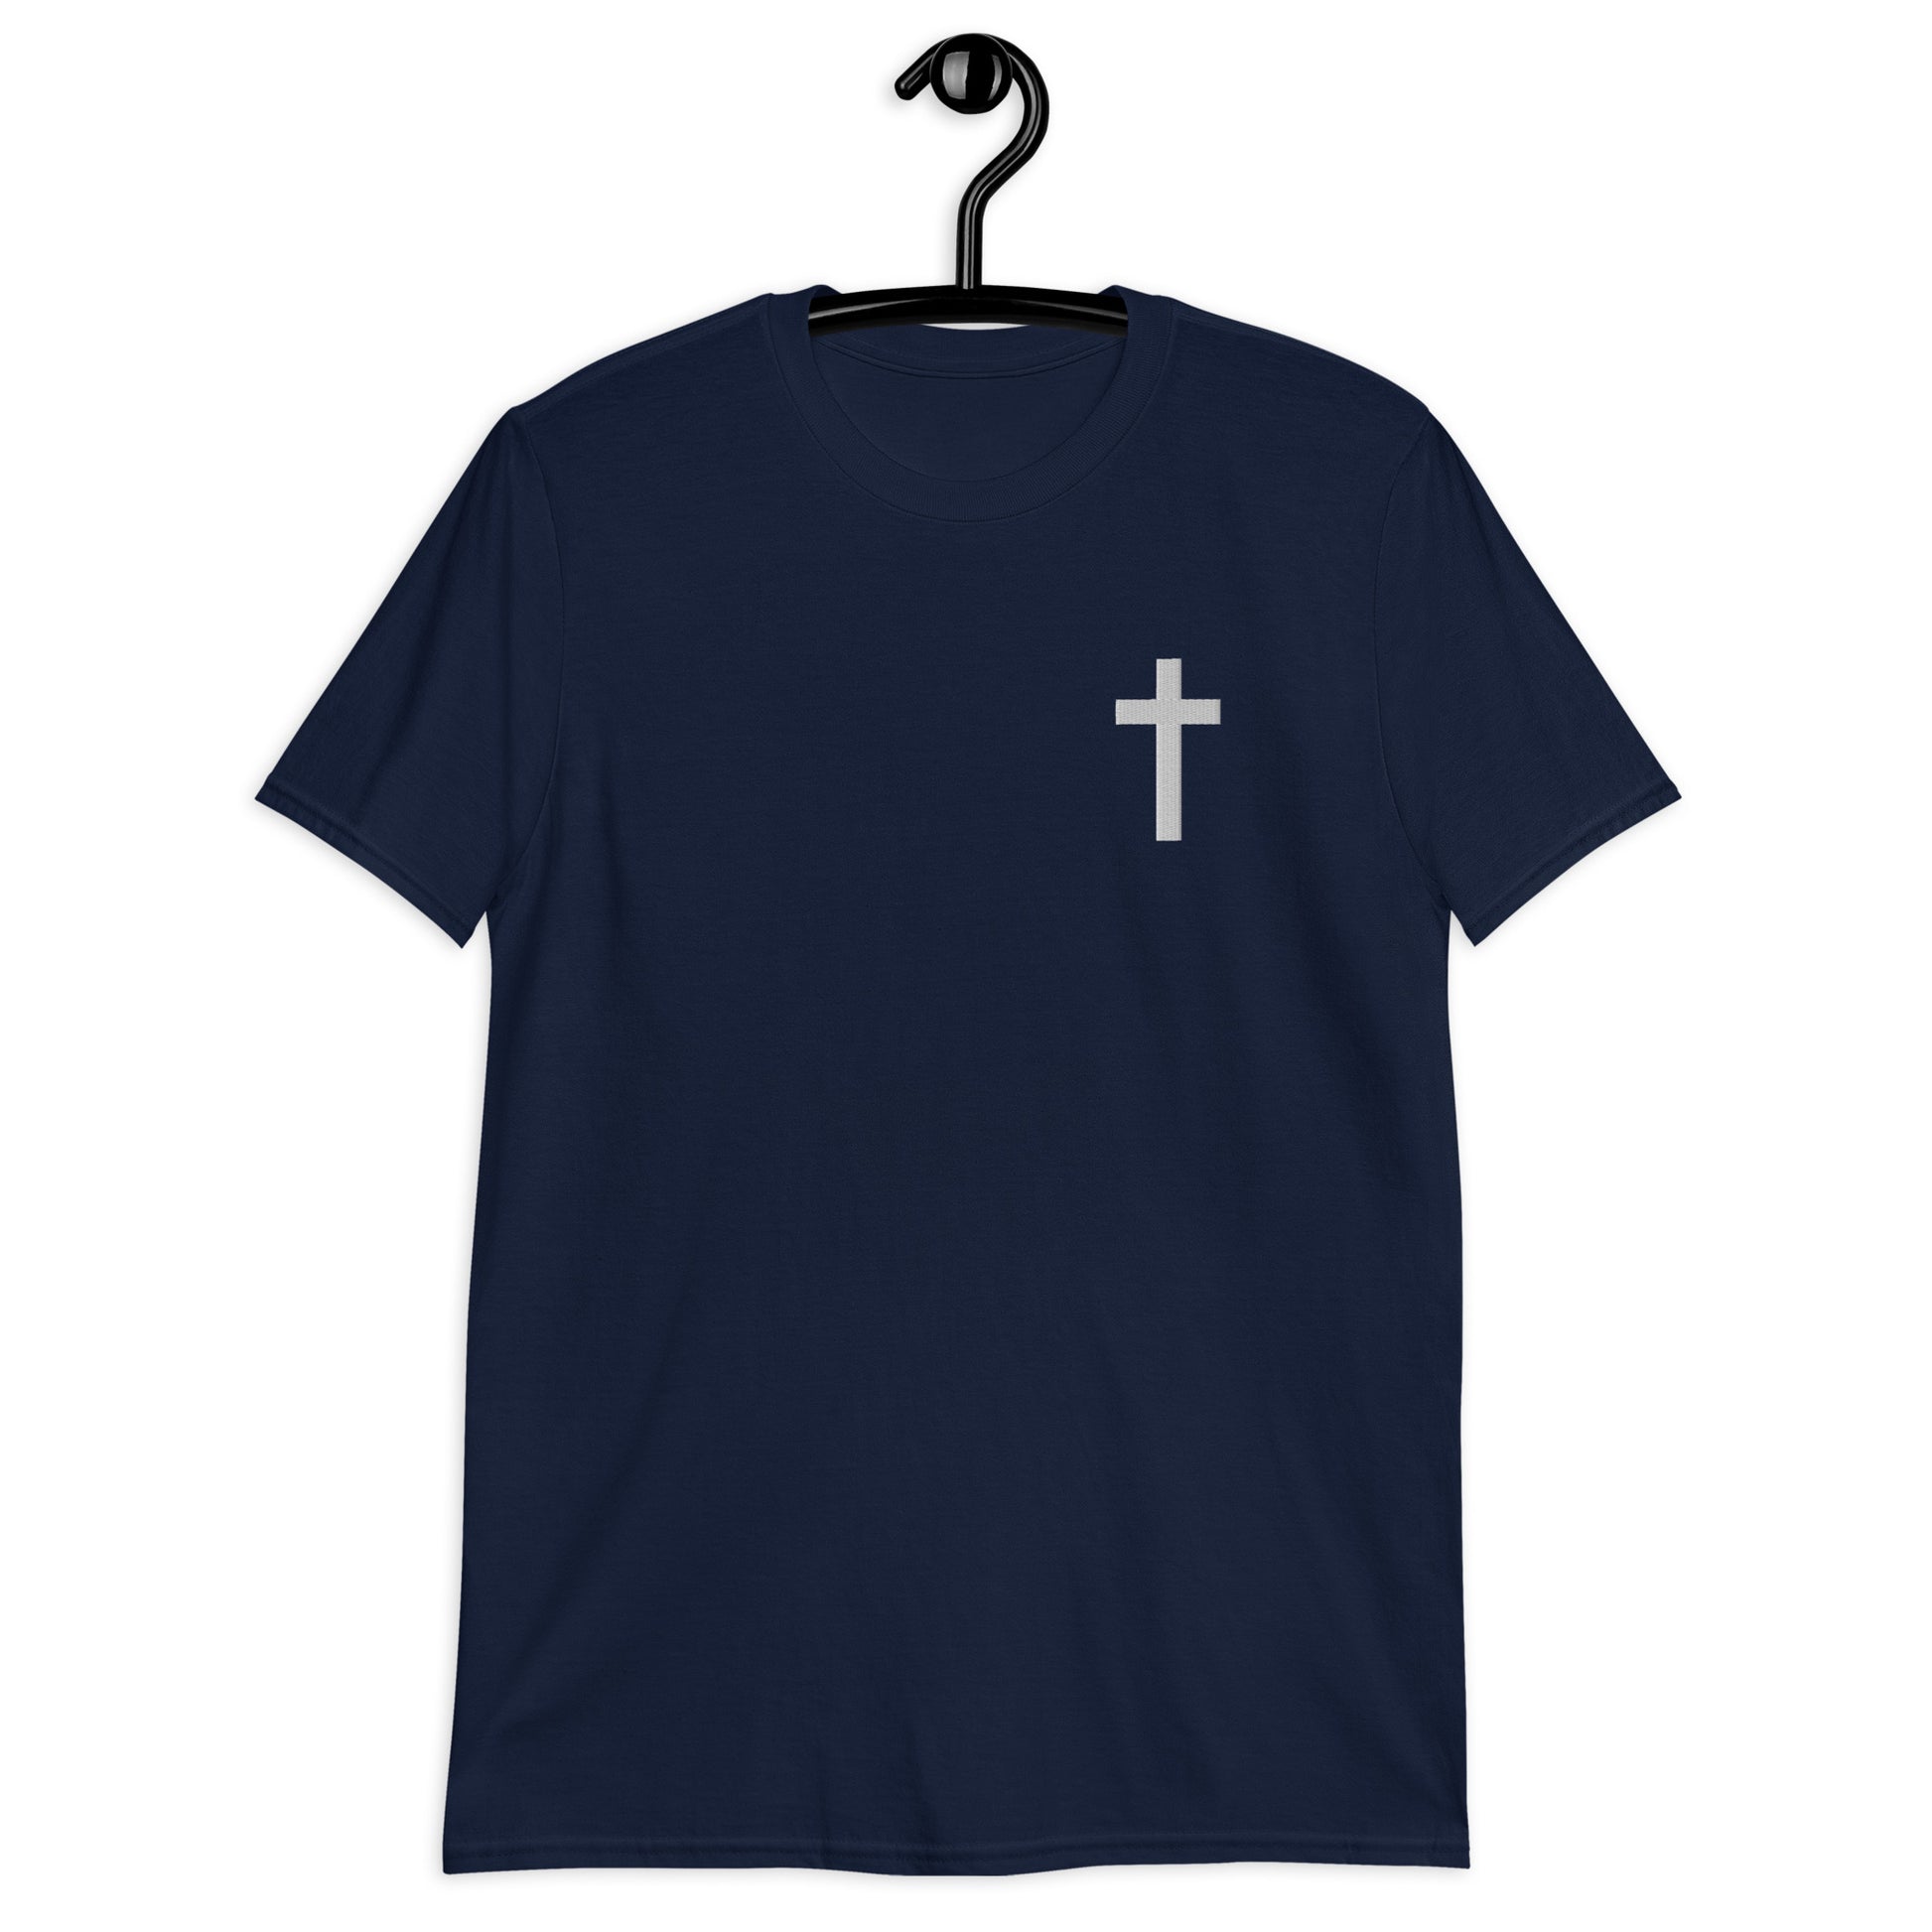 christian t shirt navy